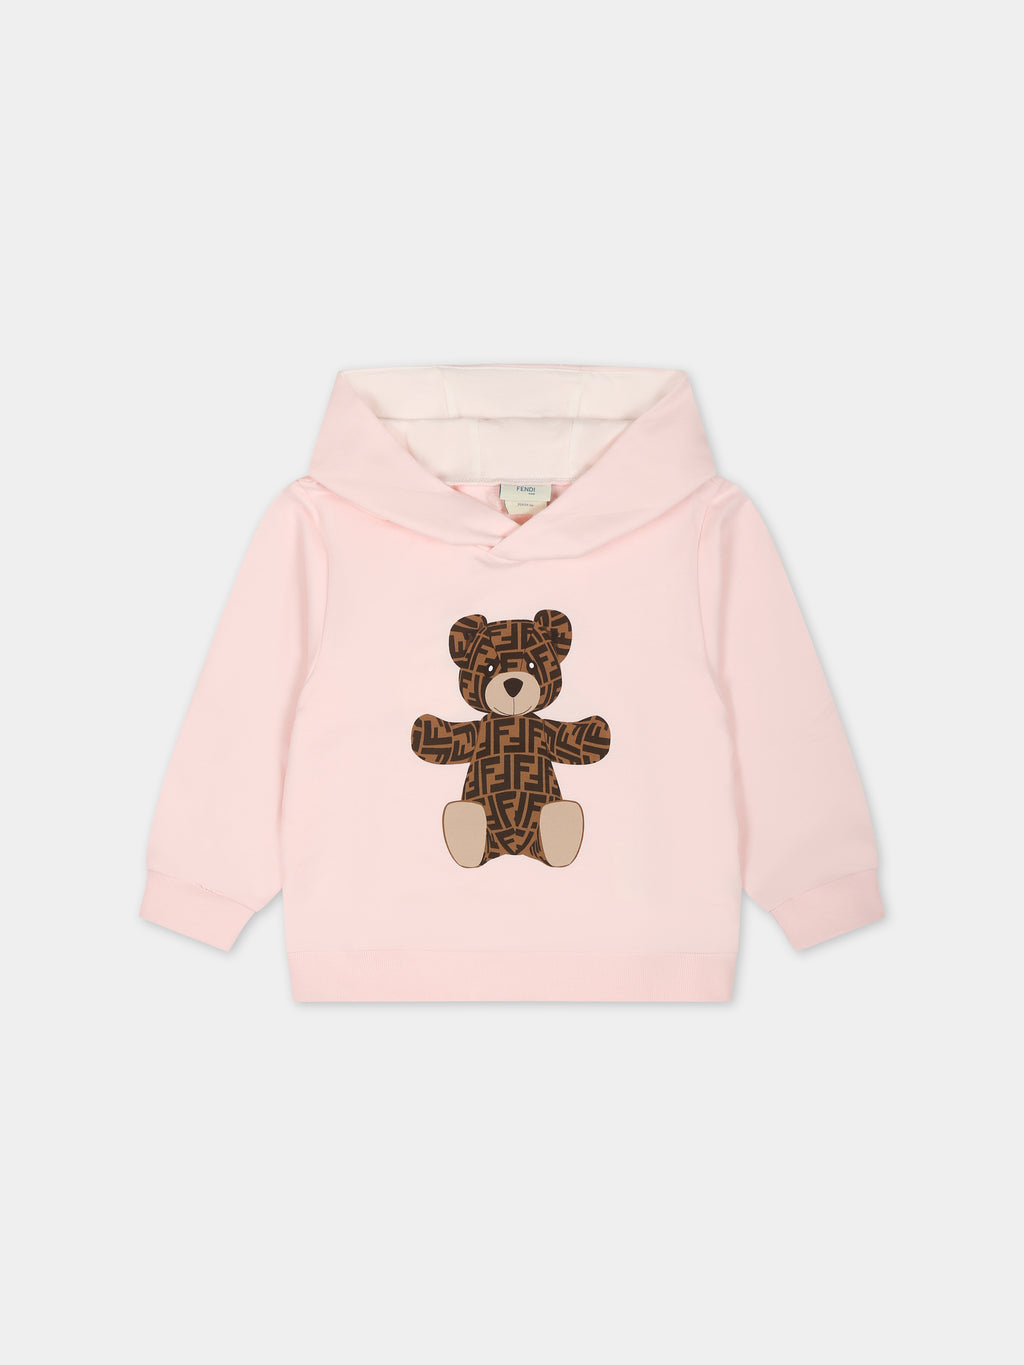 Pink sweatshirt for baby girl with bear